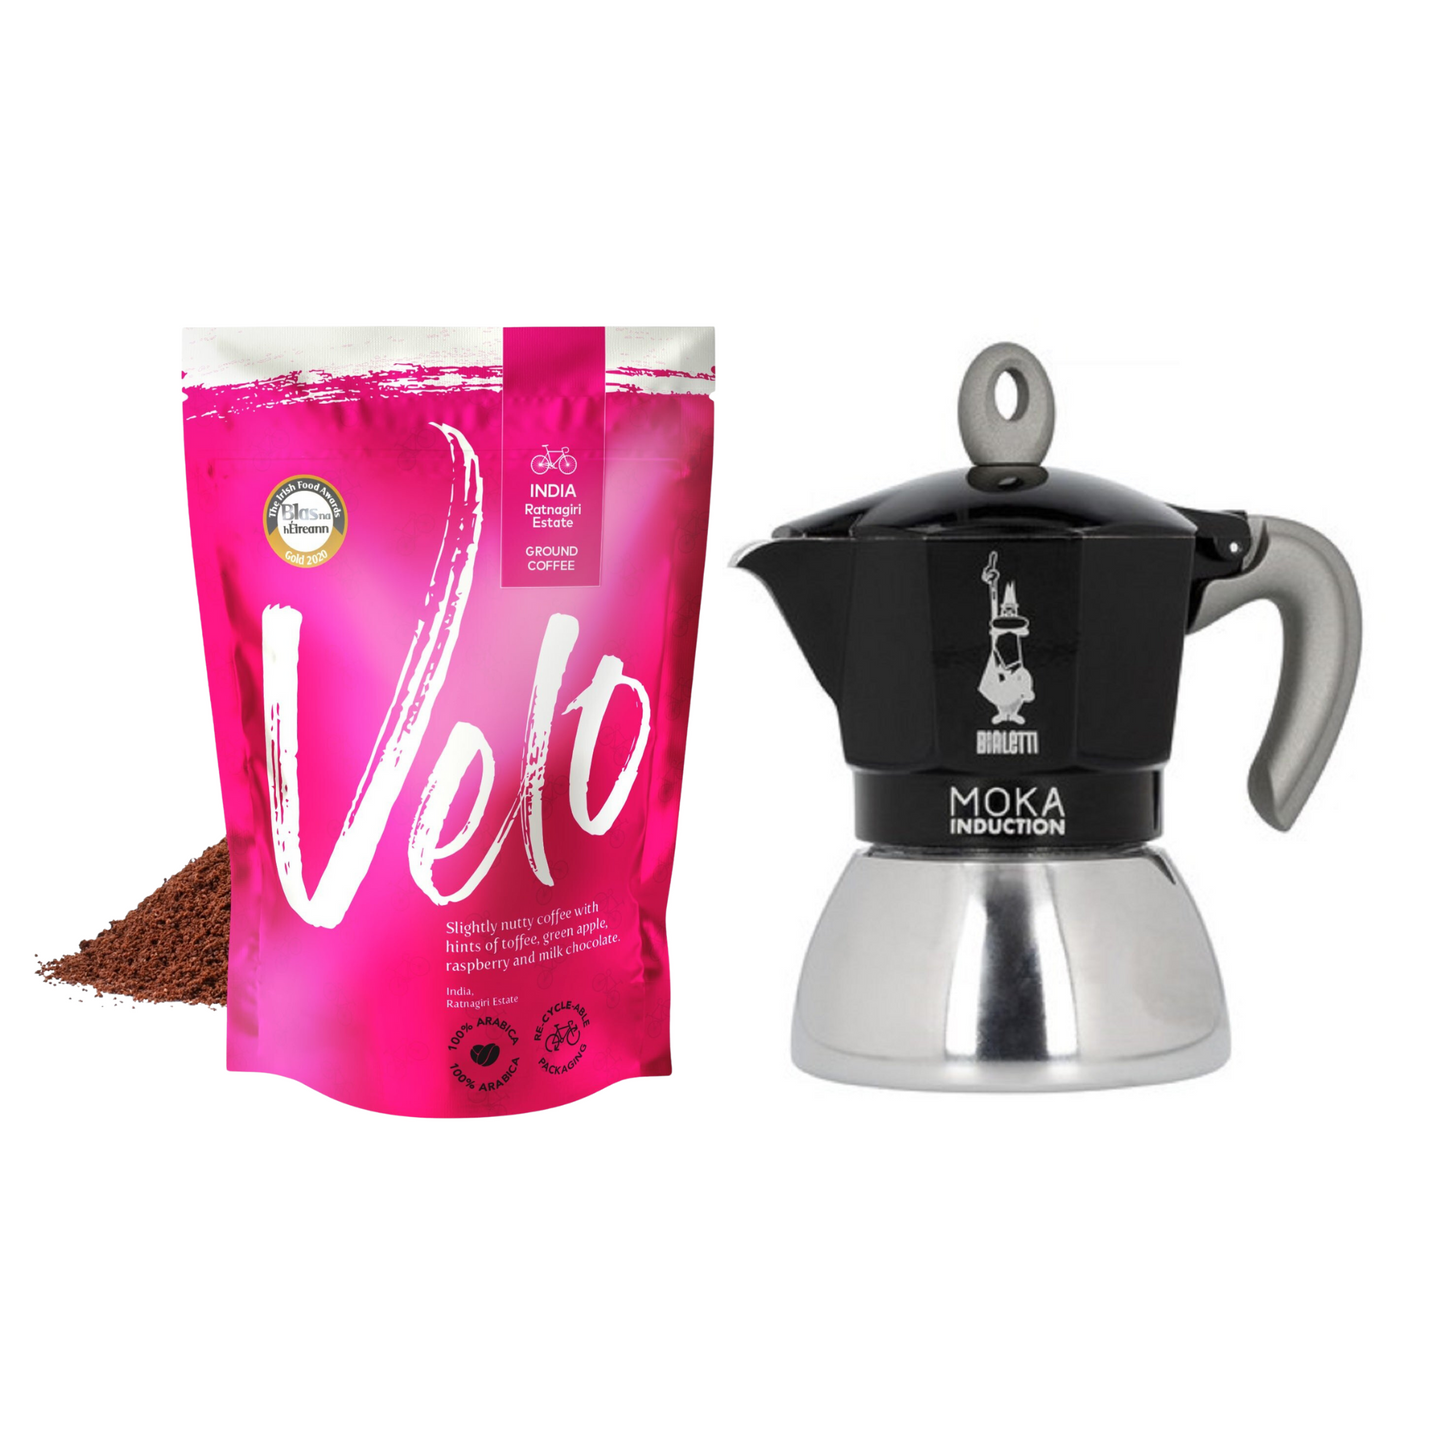 Velo India Ratnagiri & Bialetti Moka Pot Gift Set - Velo Coffee Roasters